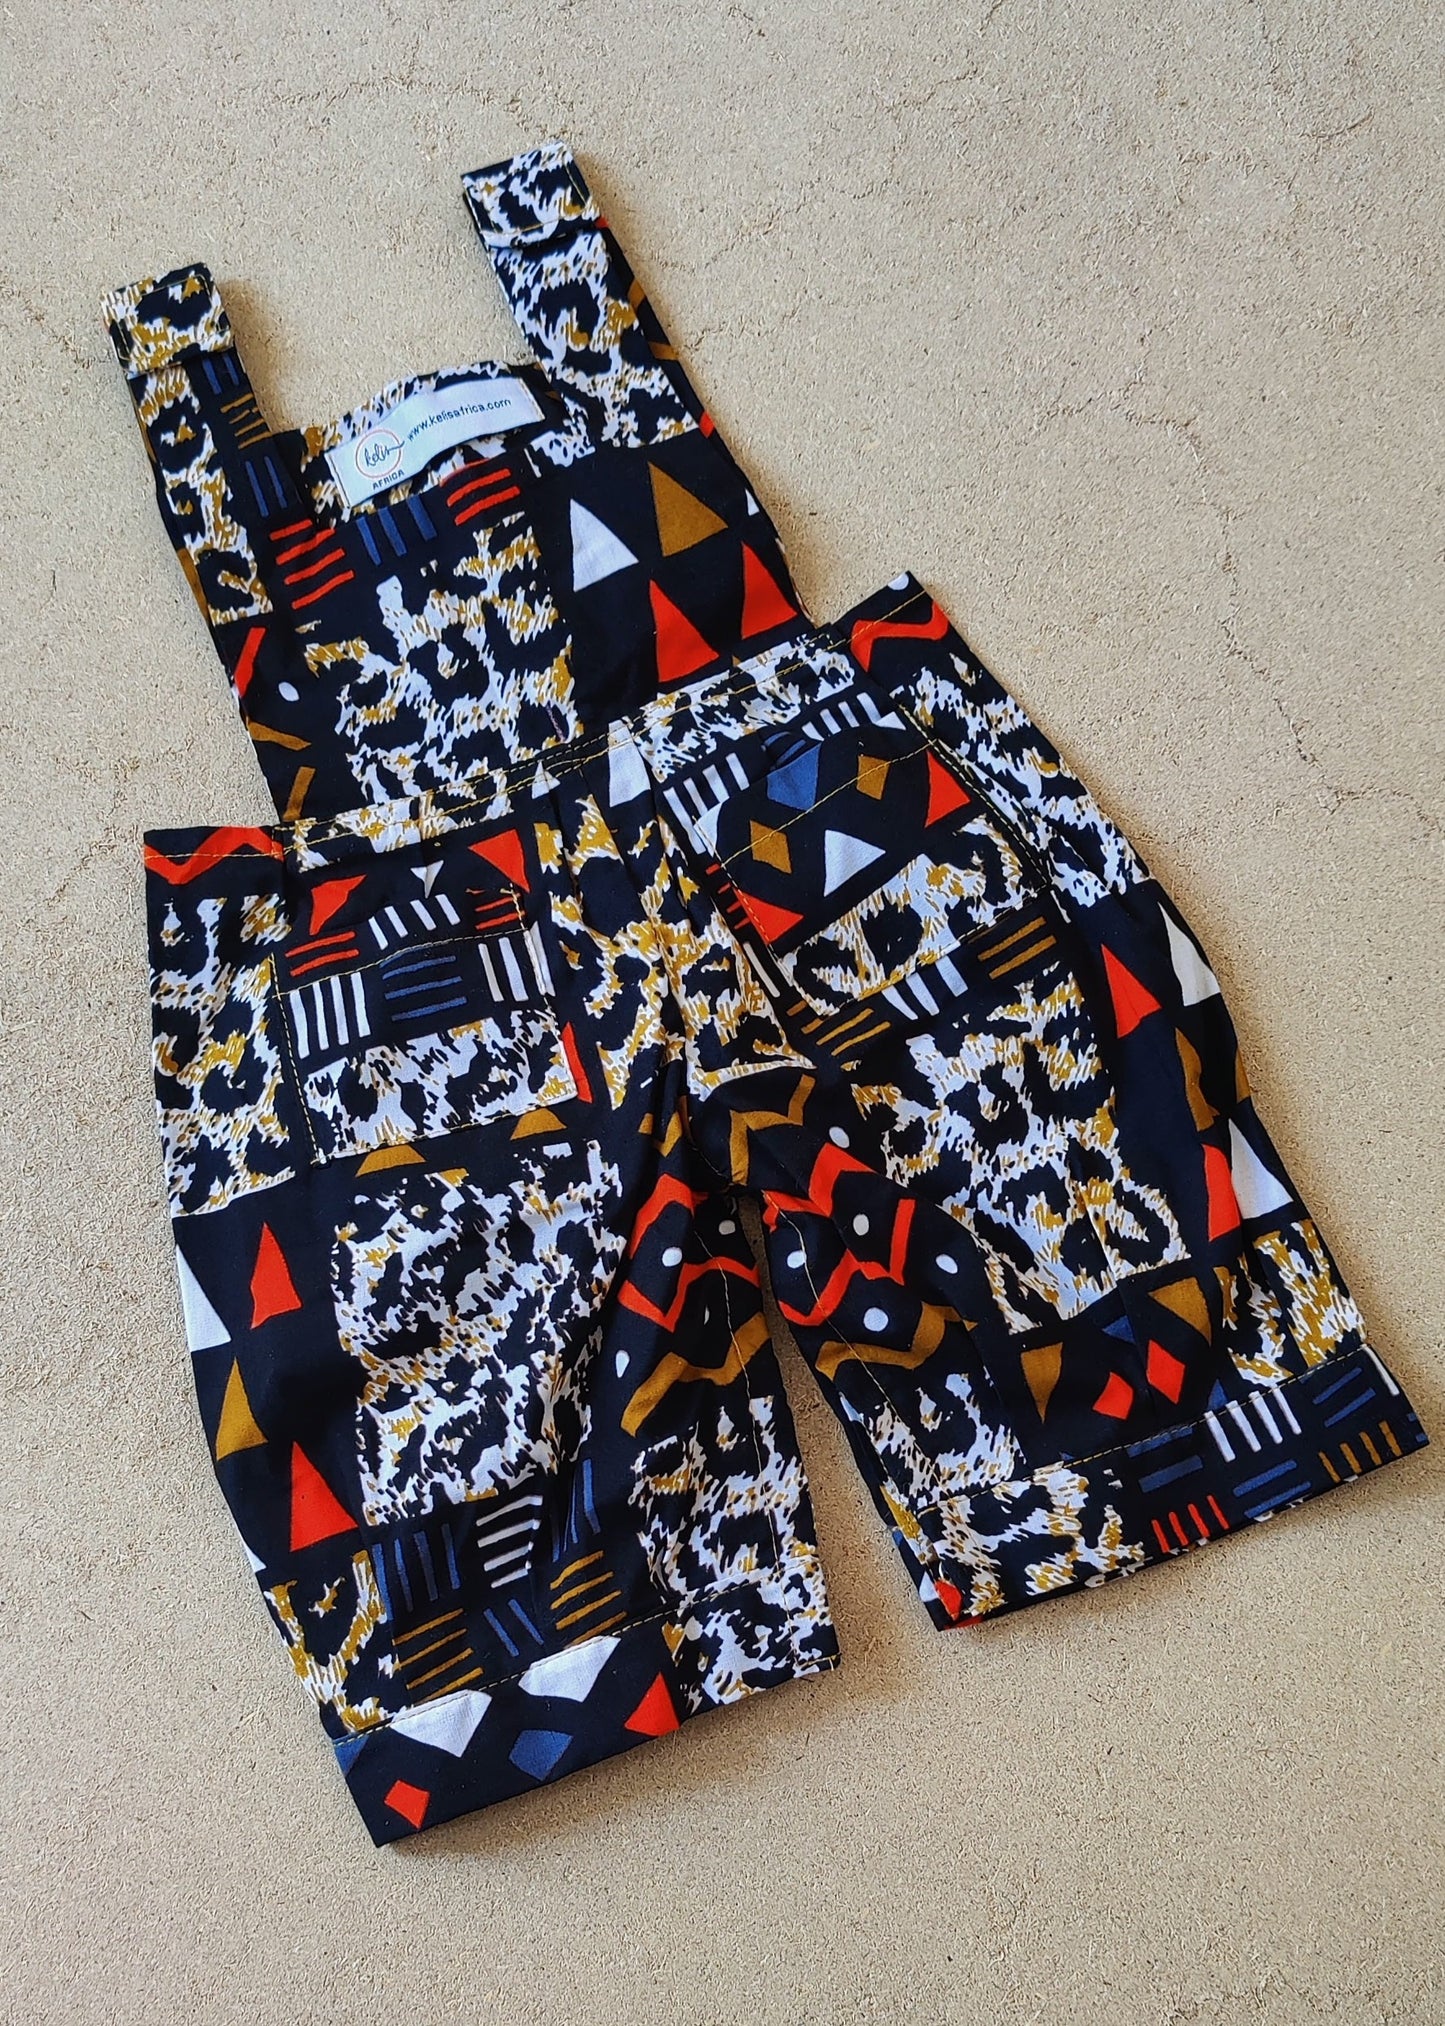 Bodysuits Ankara Baby Romper/African Print Baby  Jumpsuit